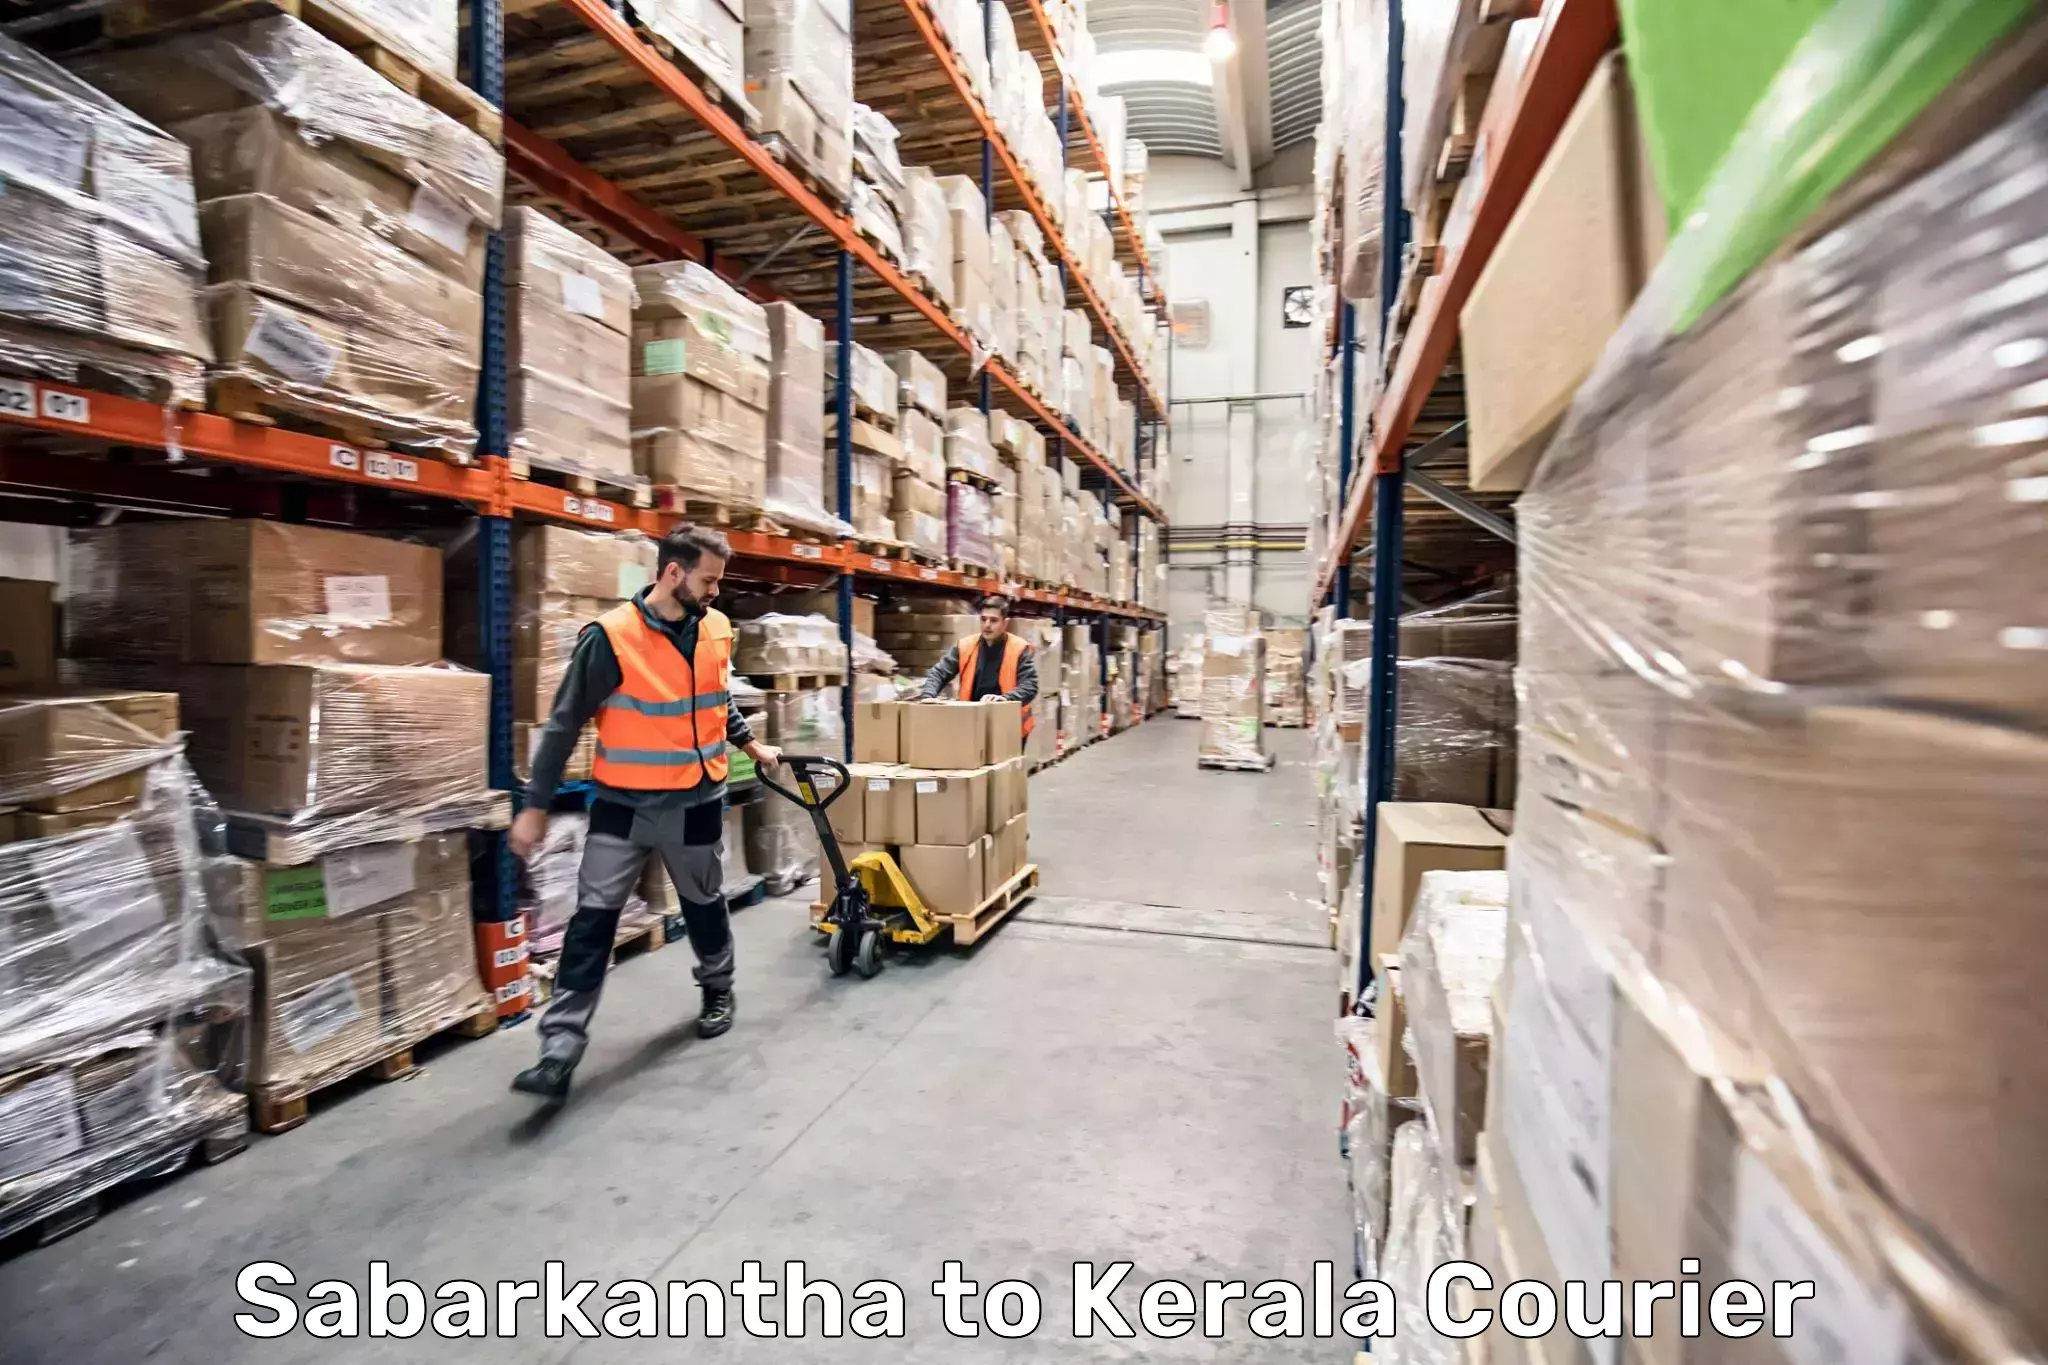 Luggage shipping specialists Sabarkantha to Cochin Port Kochi